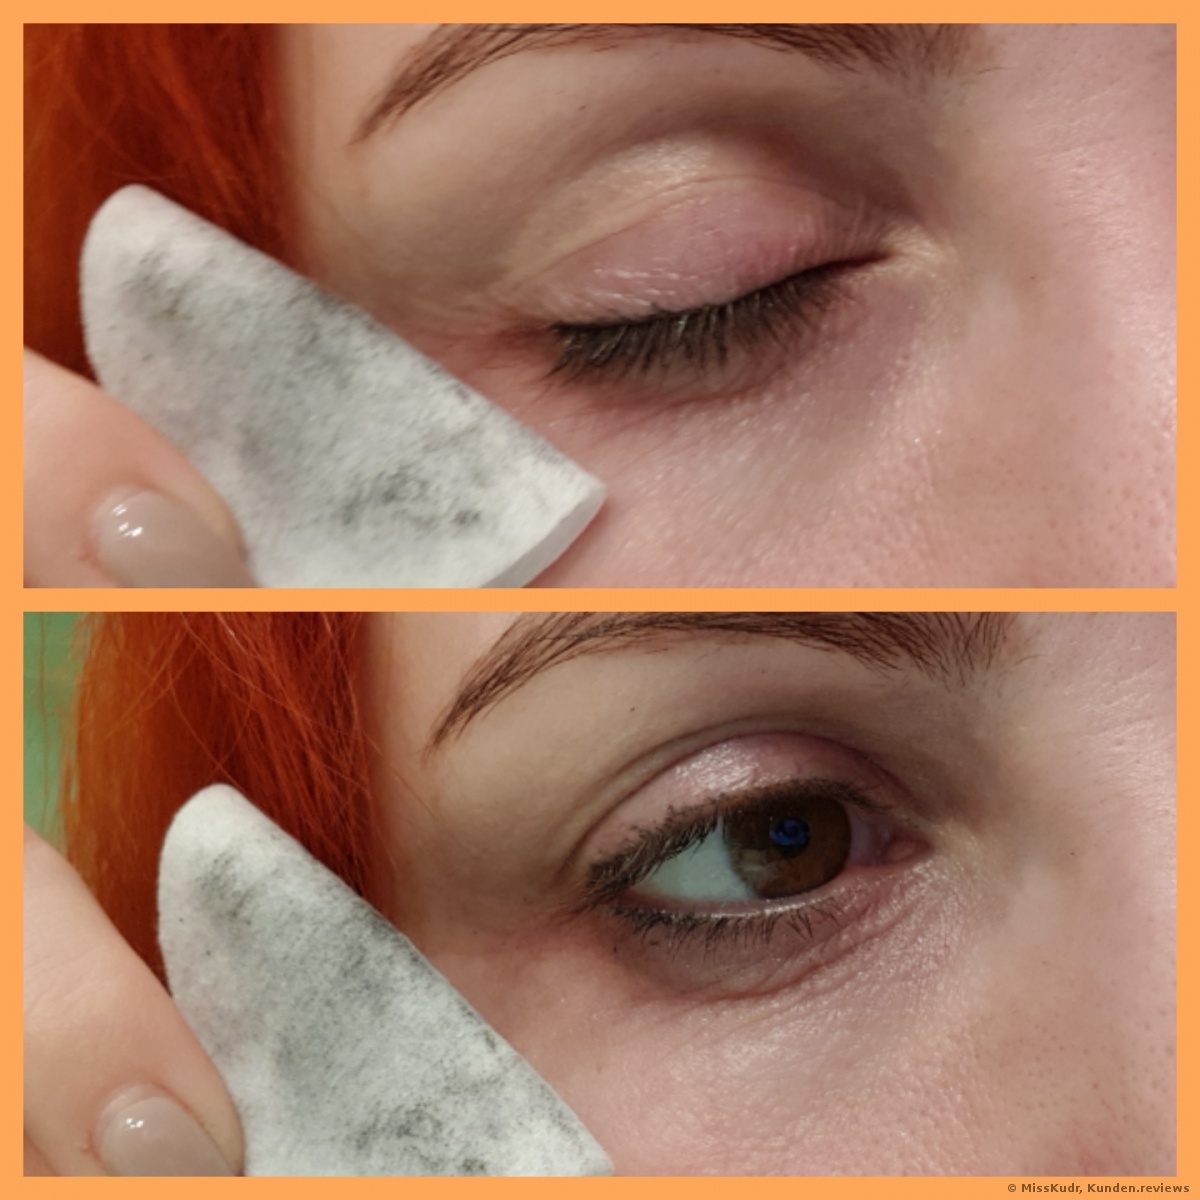  Balea Mizellen Augen-Make-up Entferner-Pads